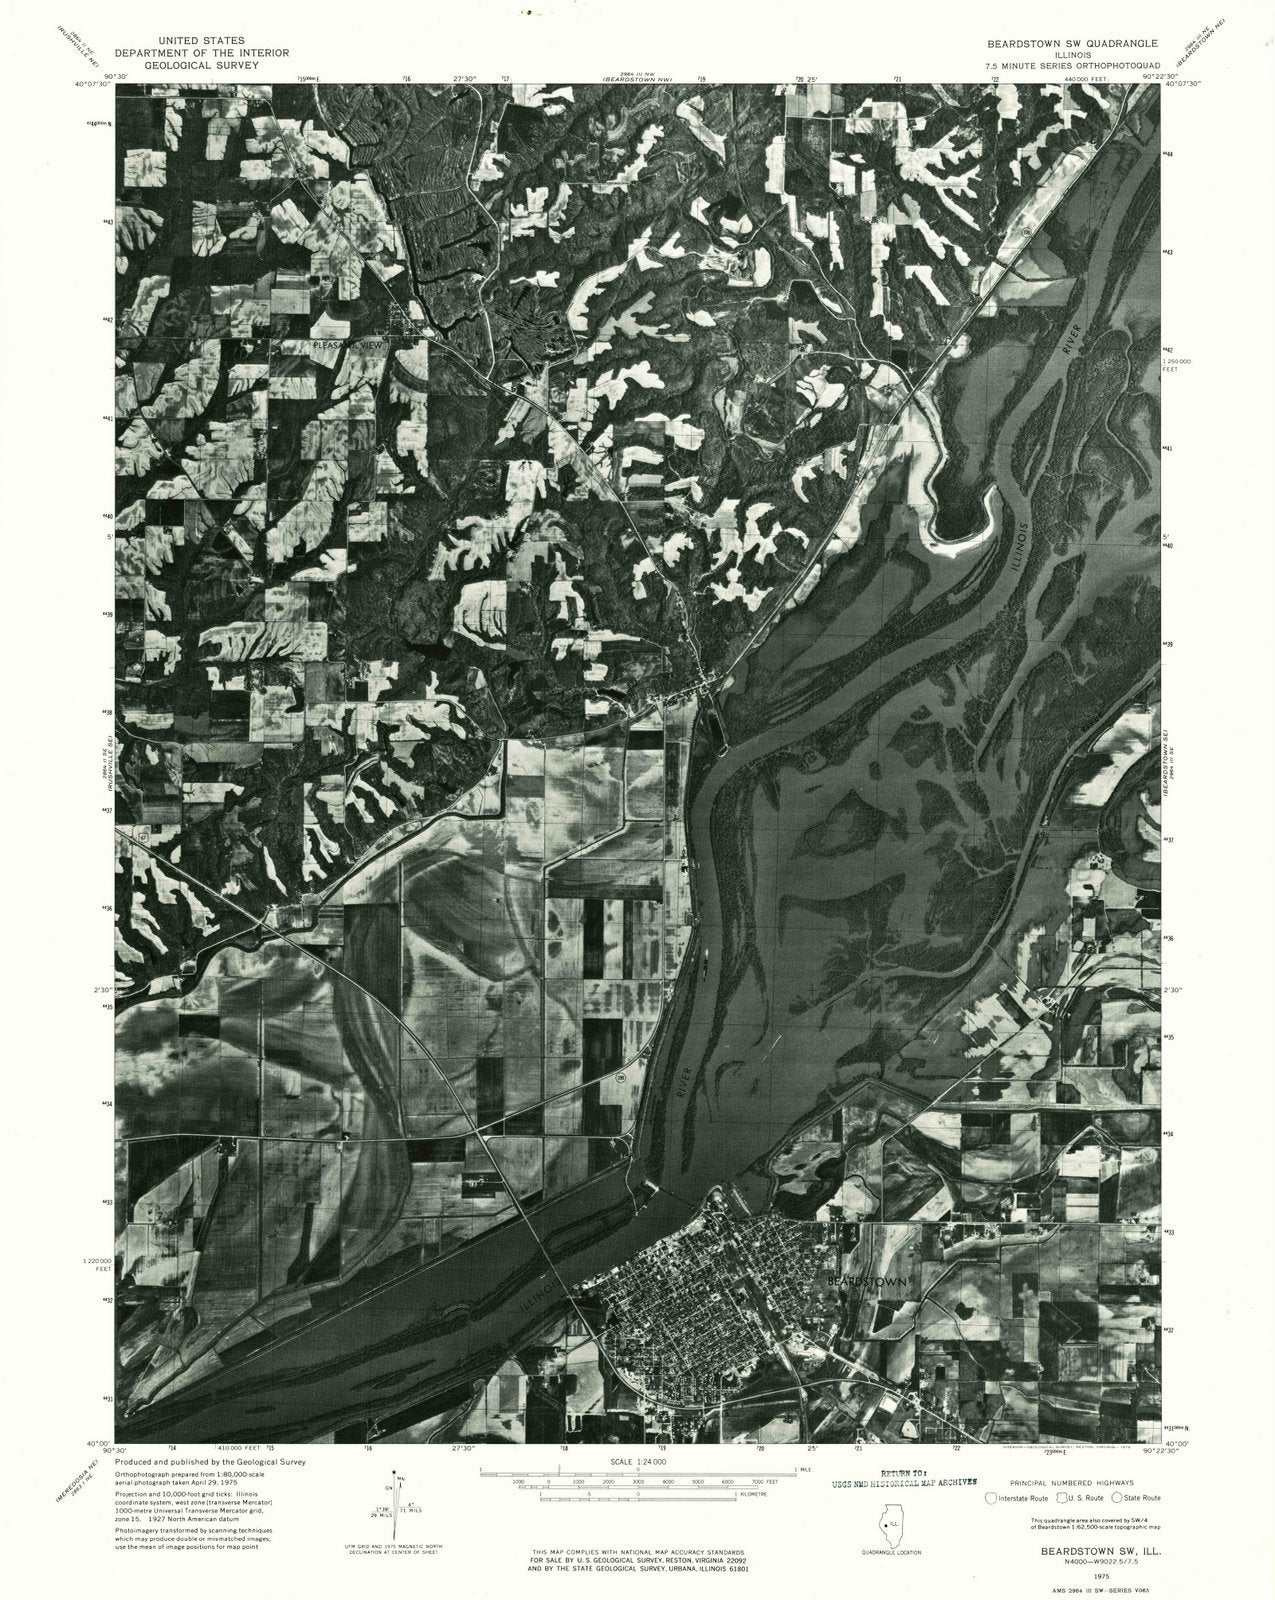 1975 Beardstown, IL - Illinois - USGS Topographic Map v2